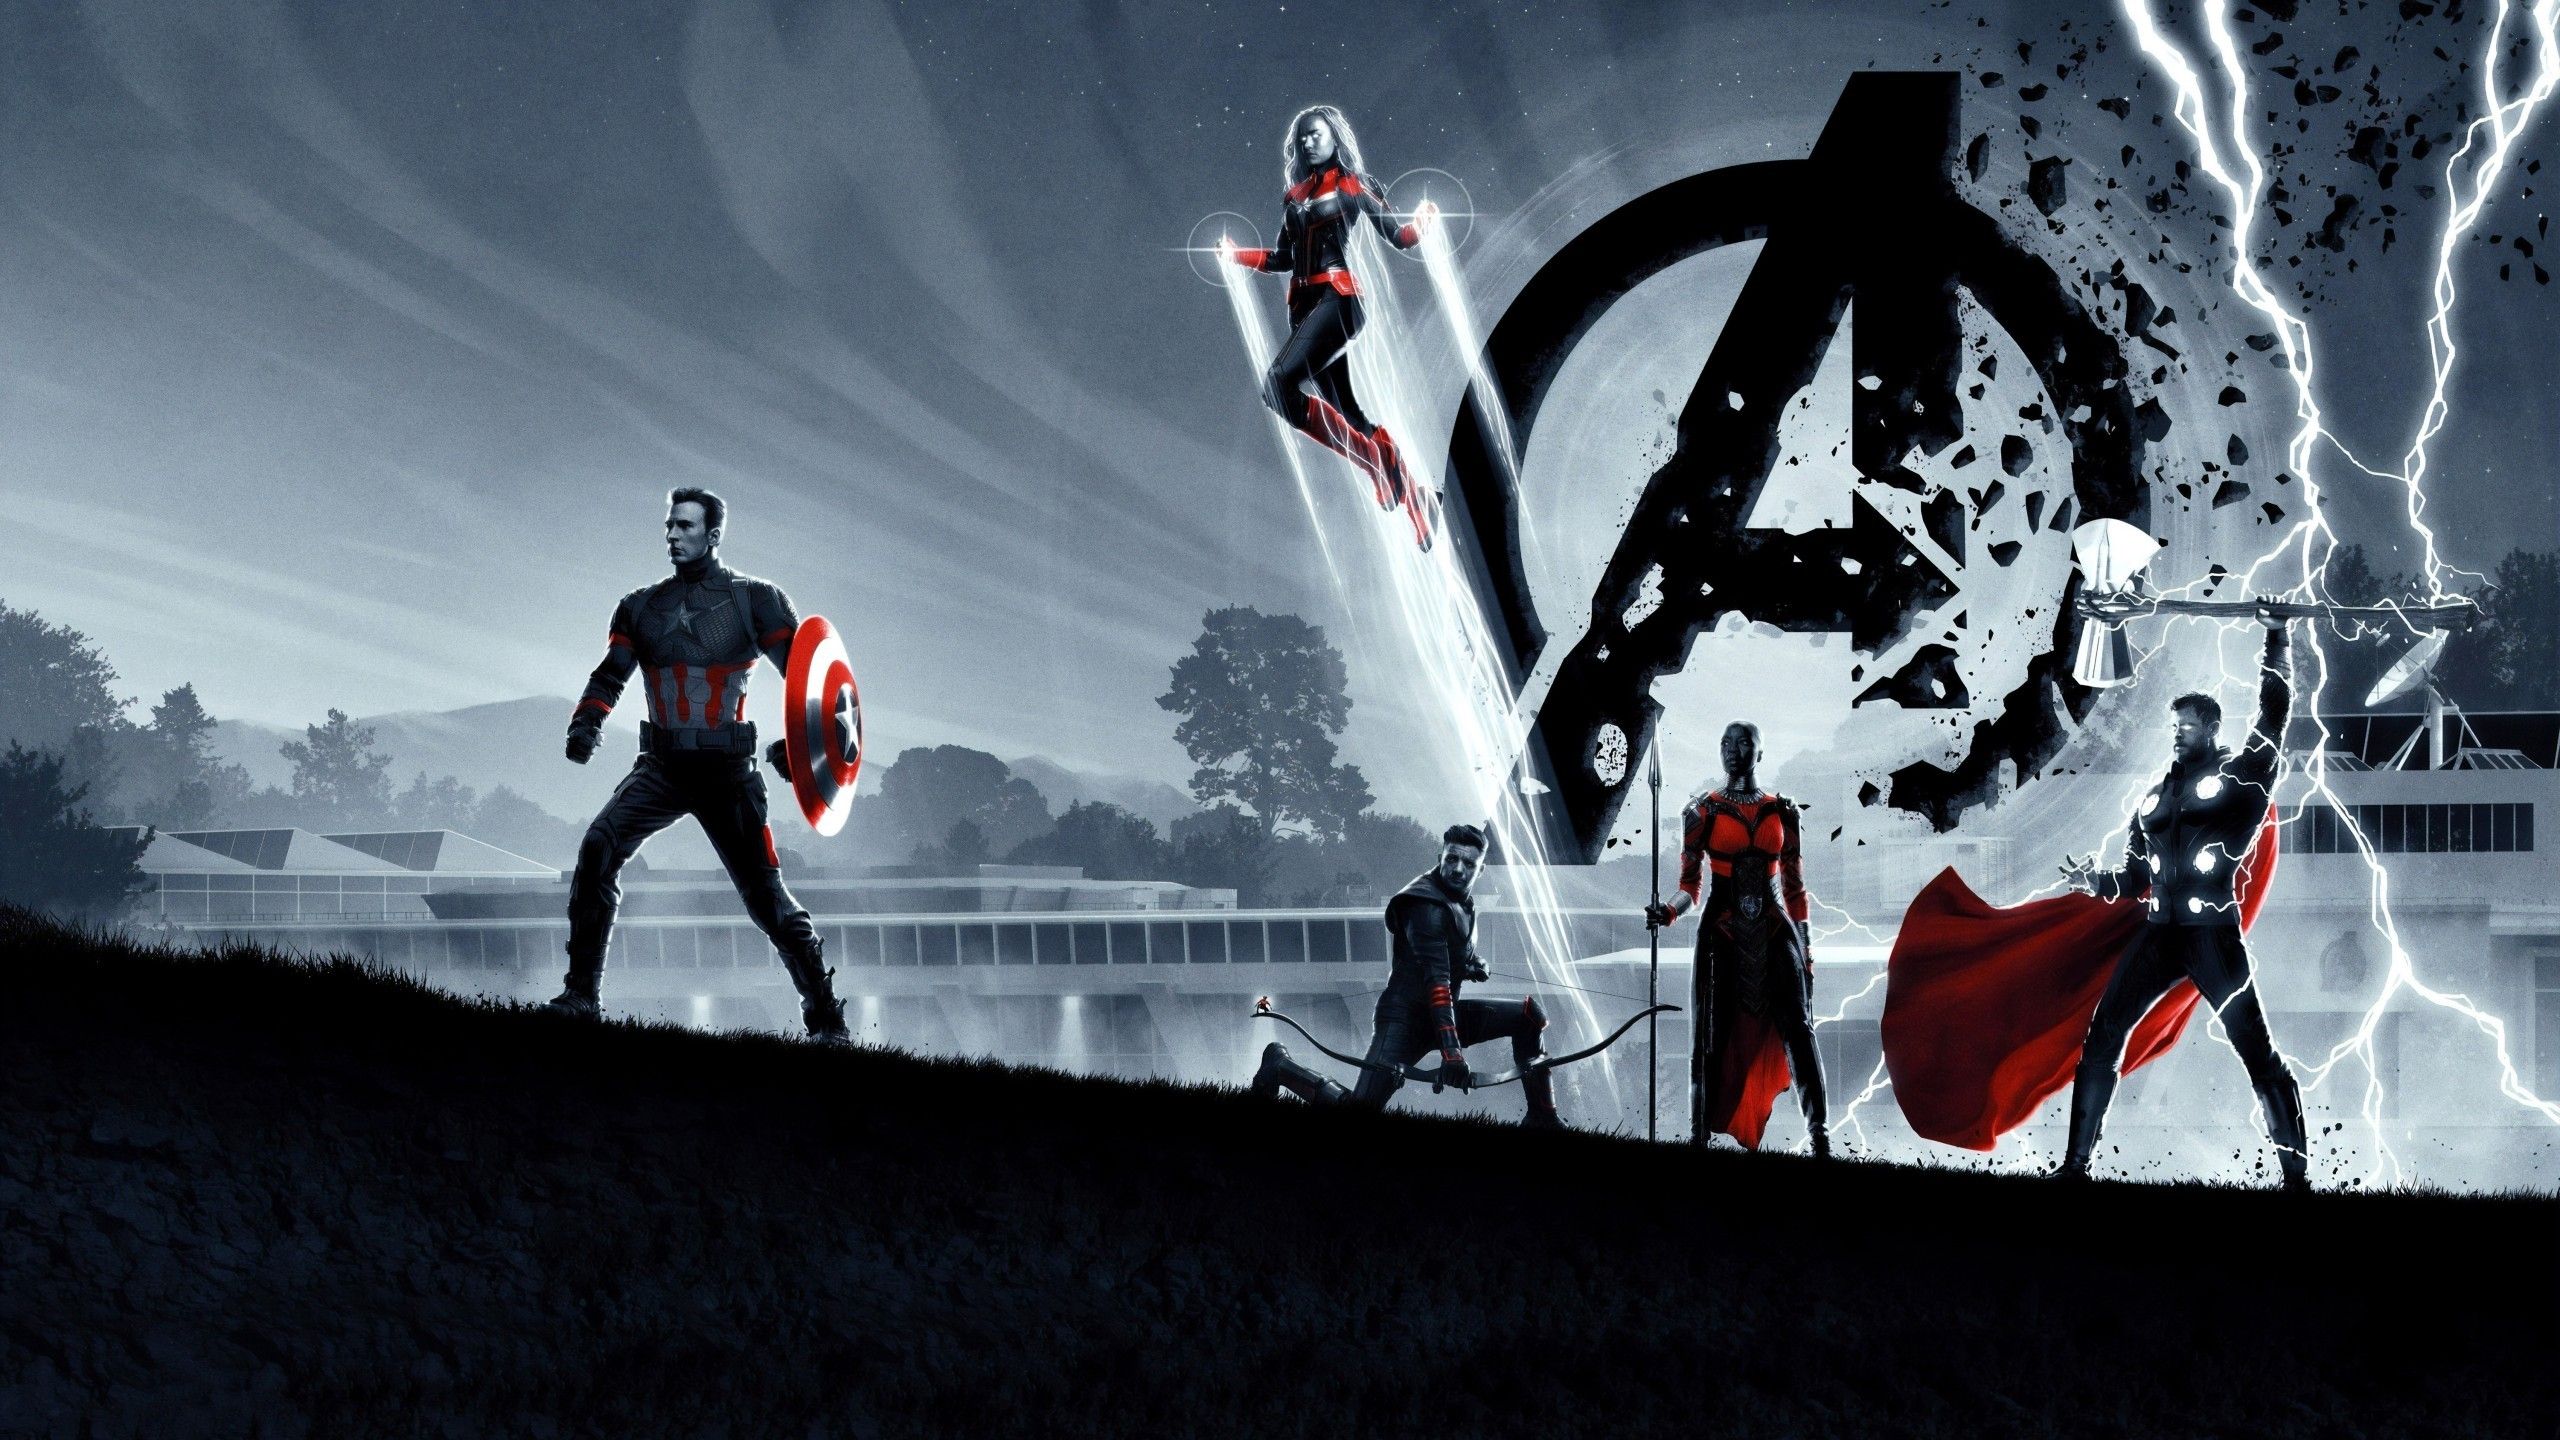 Download 2560x1440 Avengers: Endgame, Artwork, Thor, Hawkeye Wallpaper for iMac 27 inch